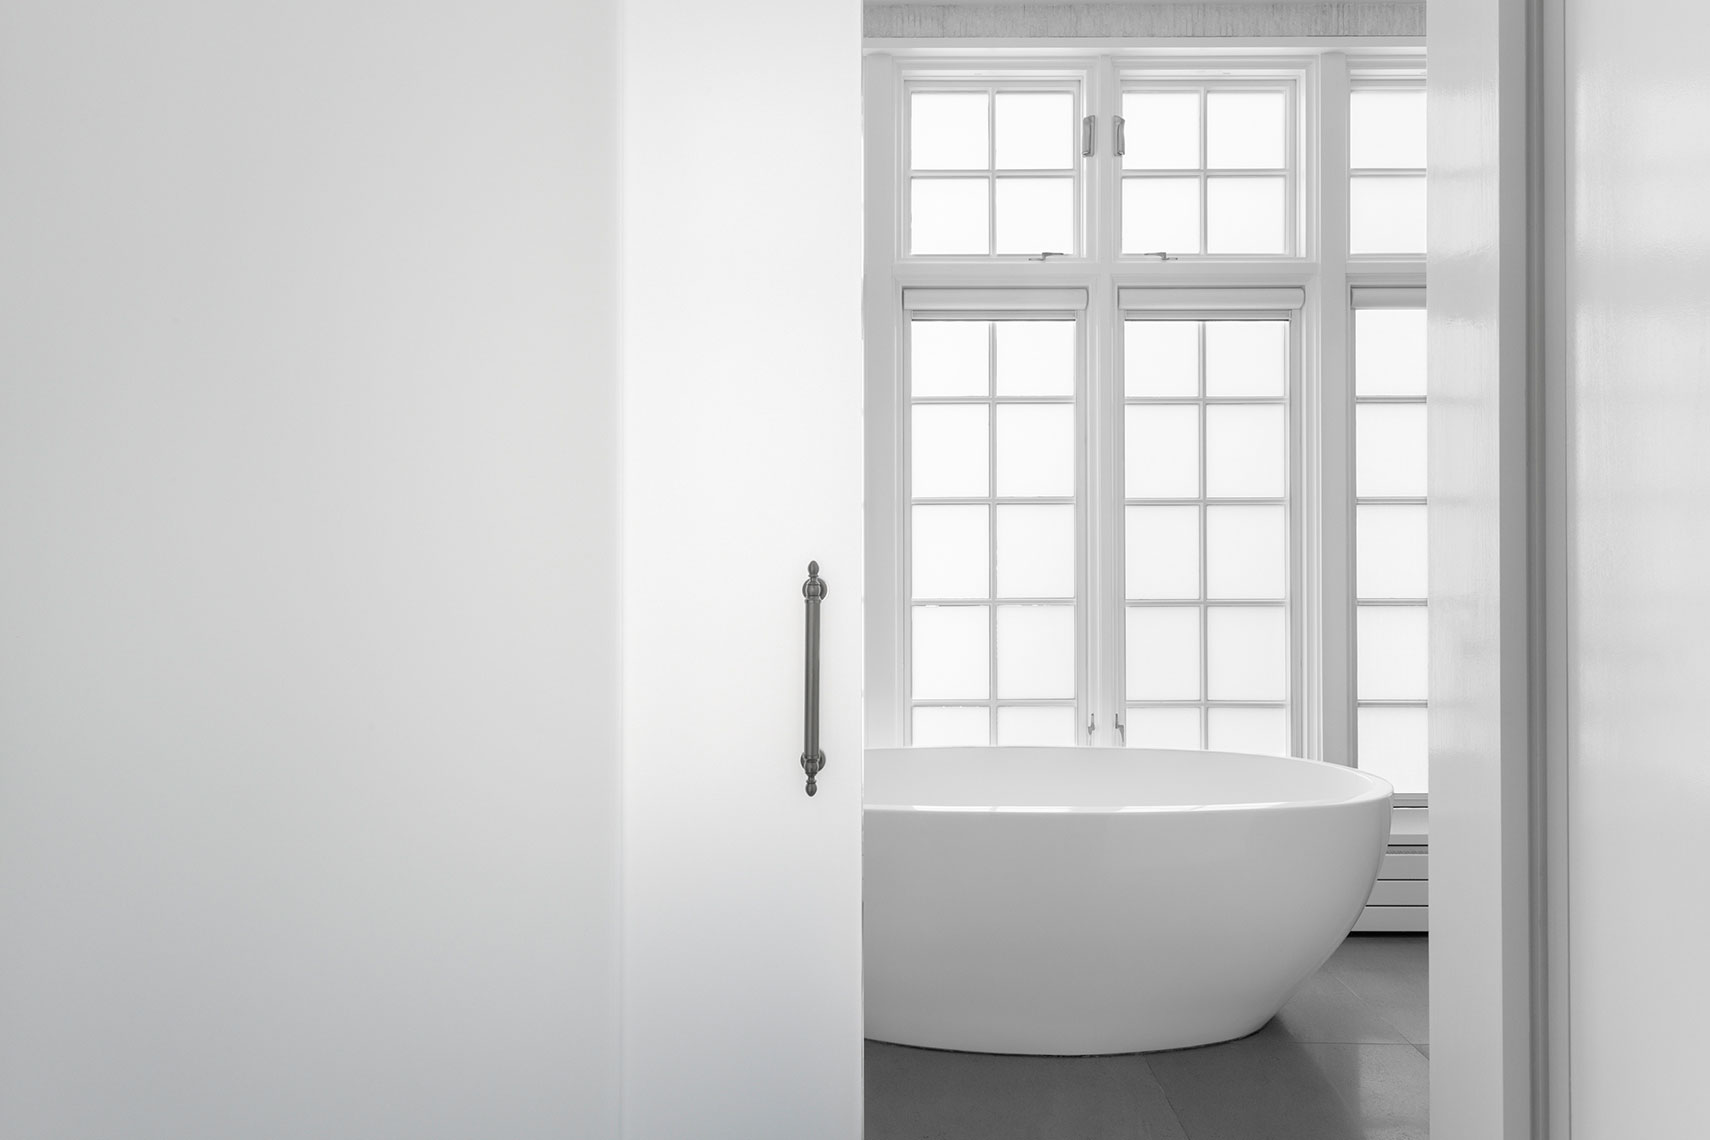 Zoe Wetherall / Interior Architecture / Bathtub